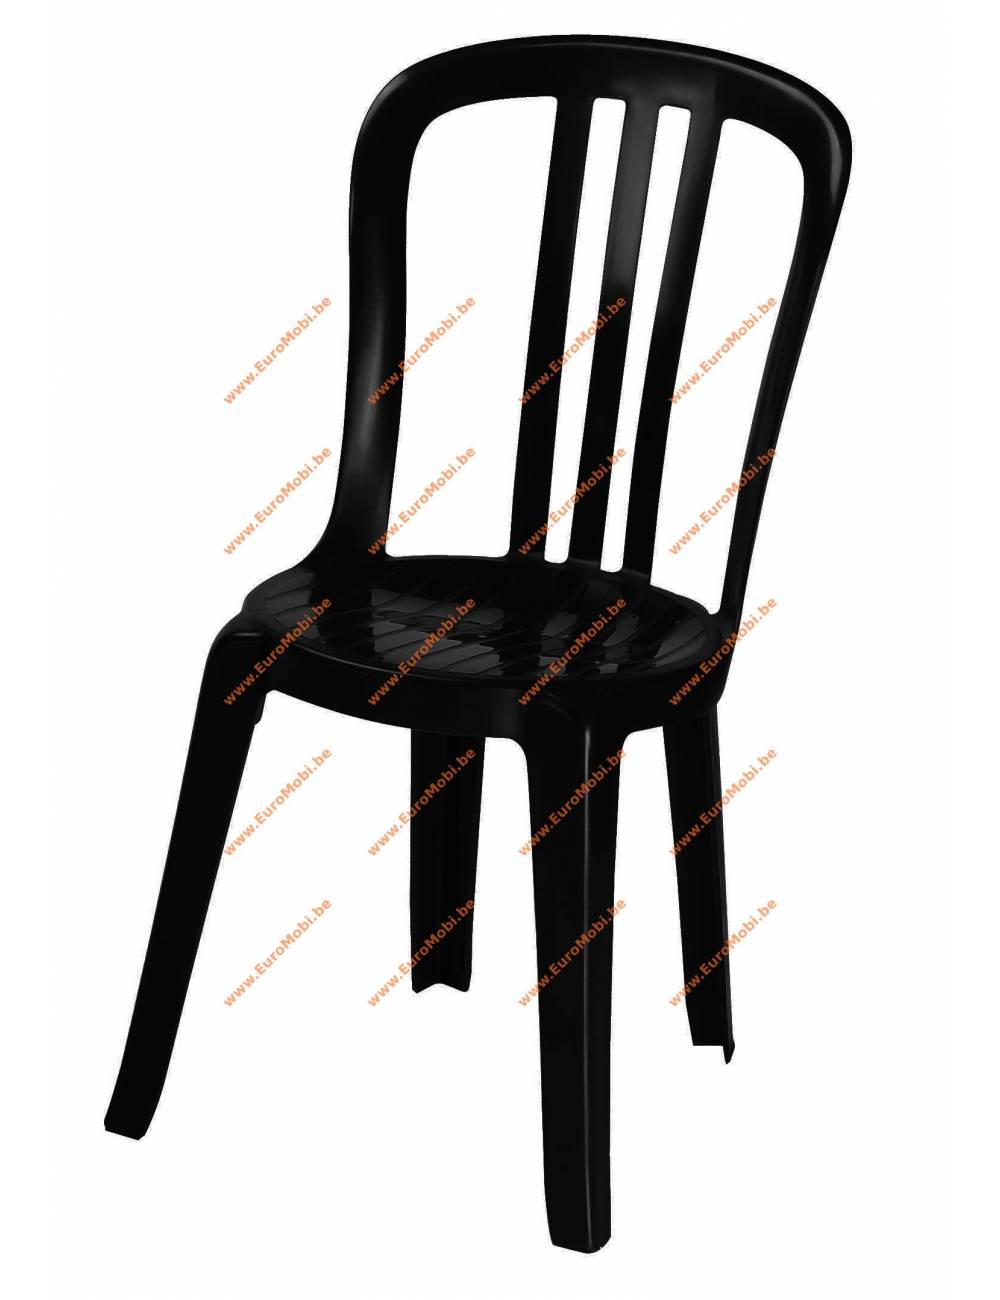 chaise Miami Bistrot noir